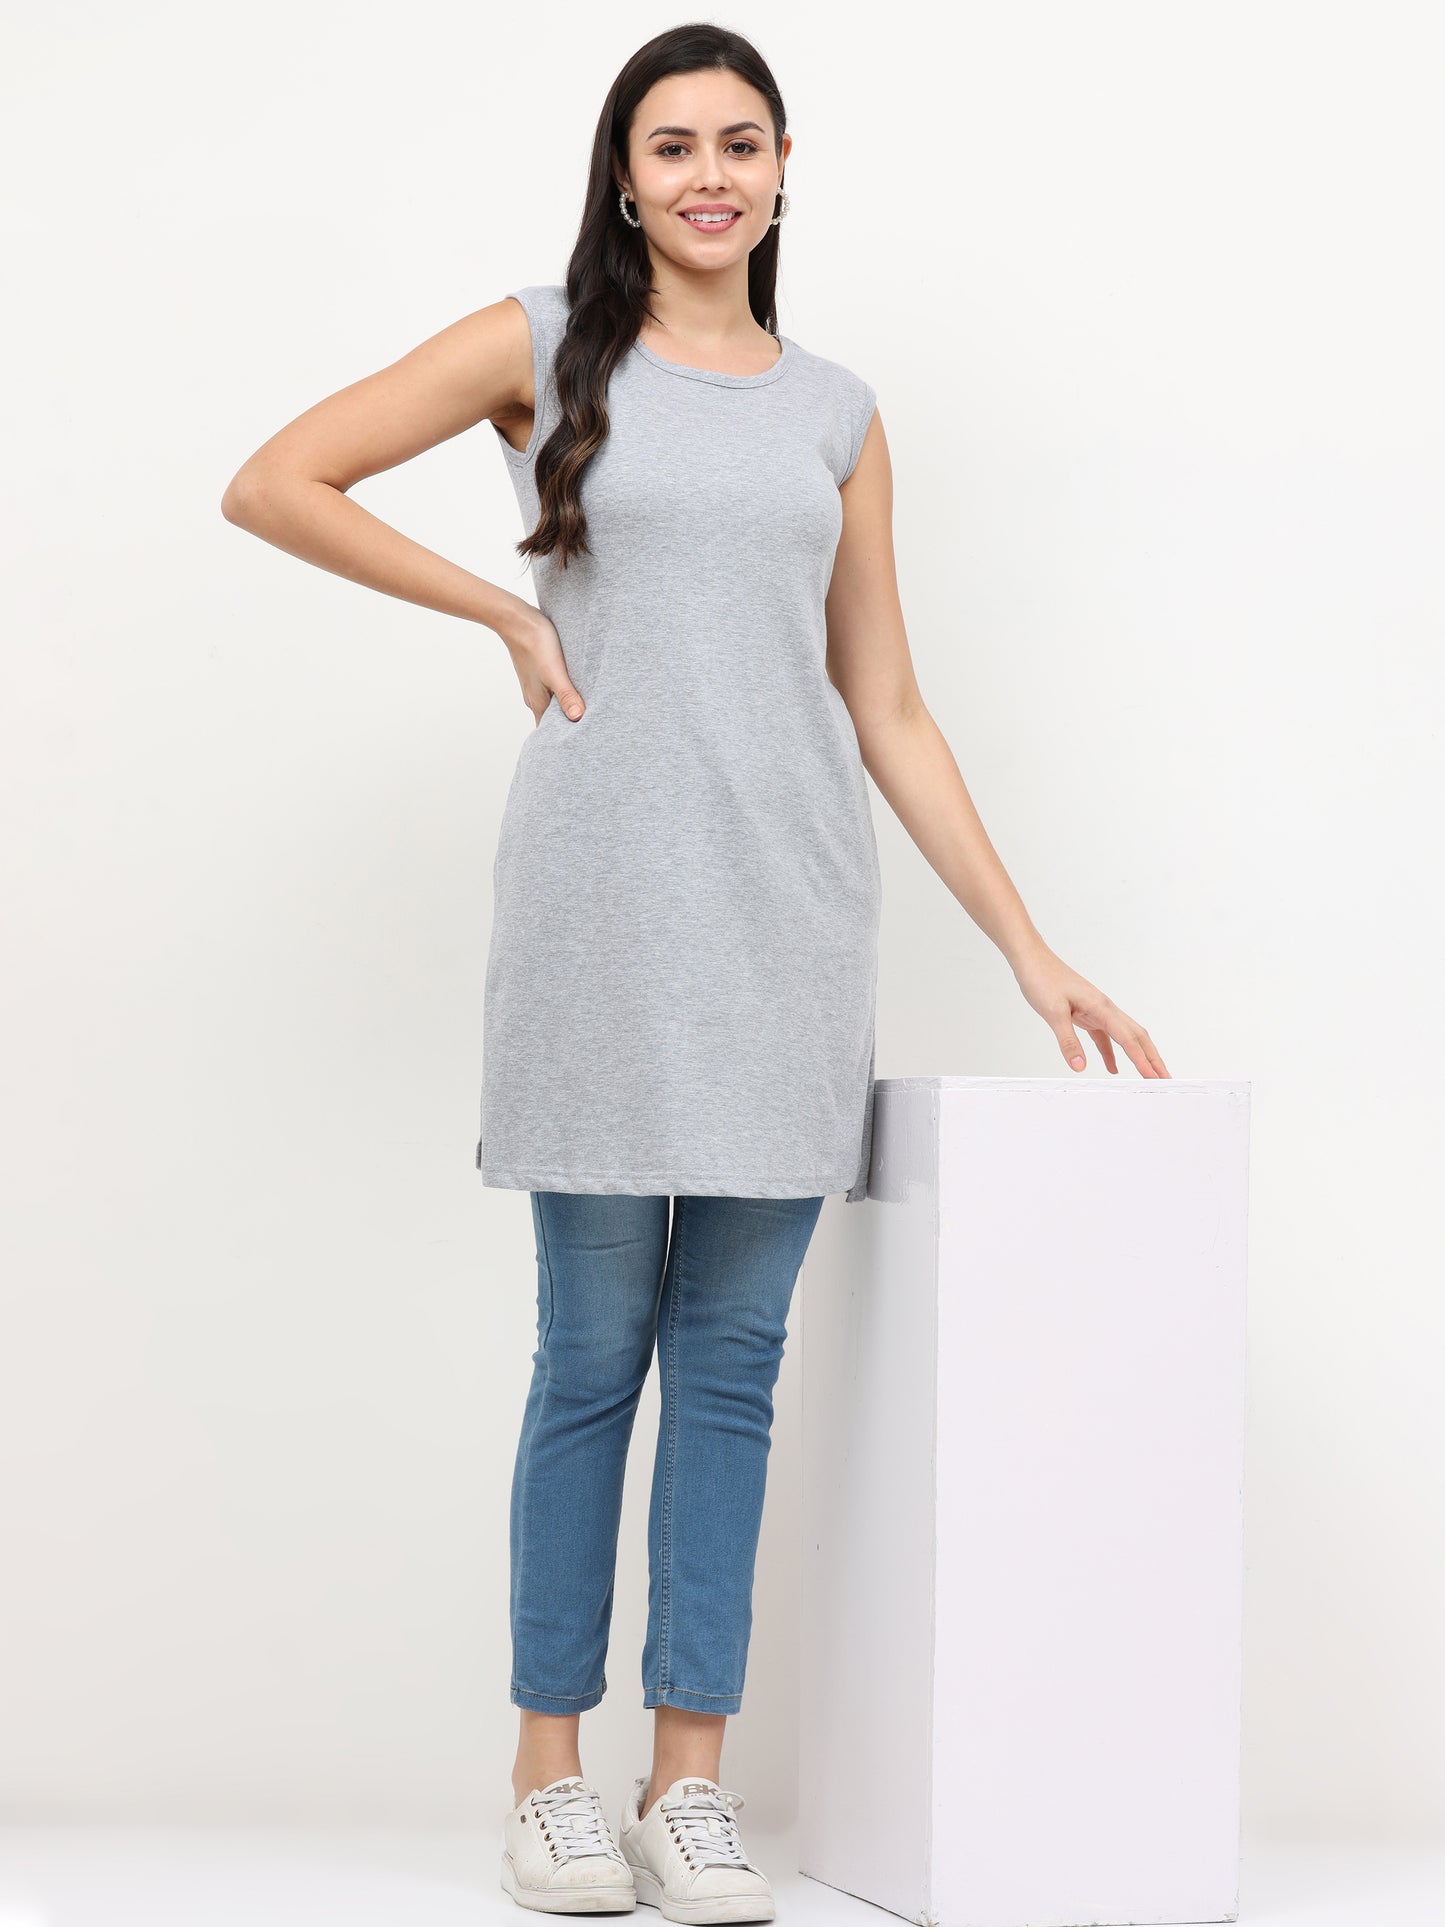 Women's Cotton Round Neck Plain Grey Melange Color Sleeveless Long Top